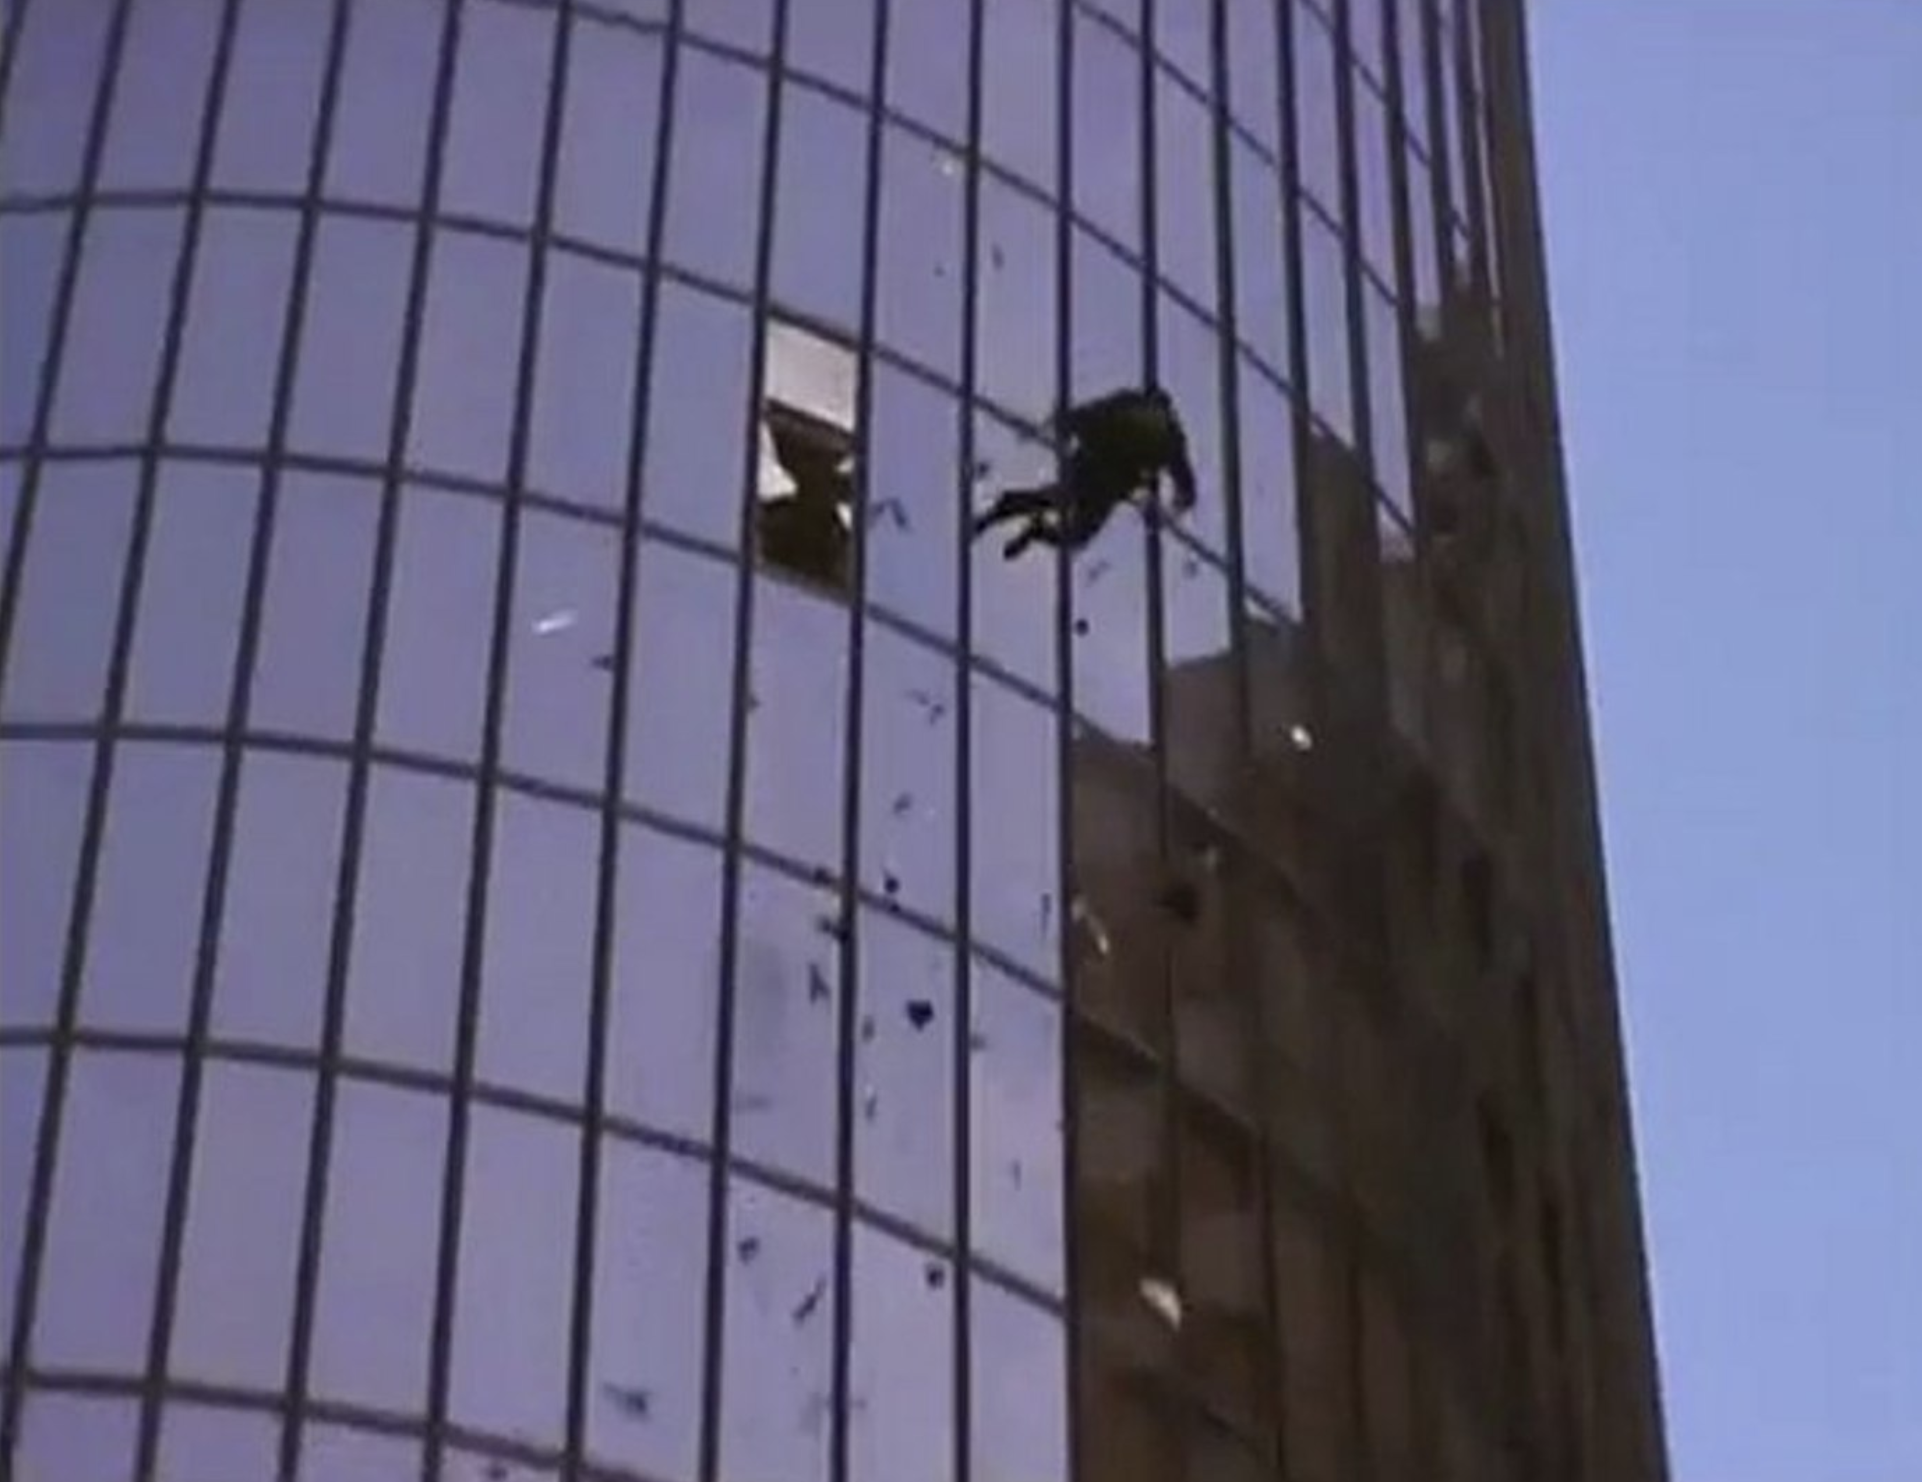 "Stuntman Dar Robinson fell 220 feet for the movie Sharky's Machine, setting a world record."